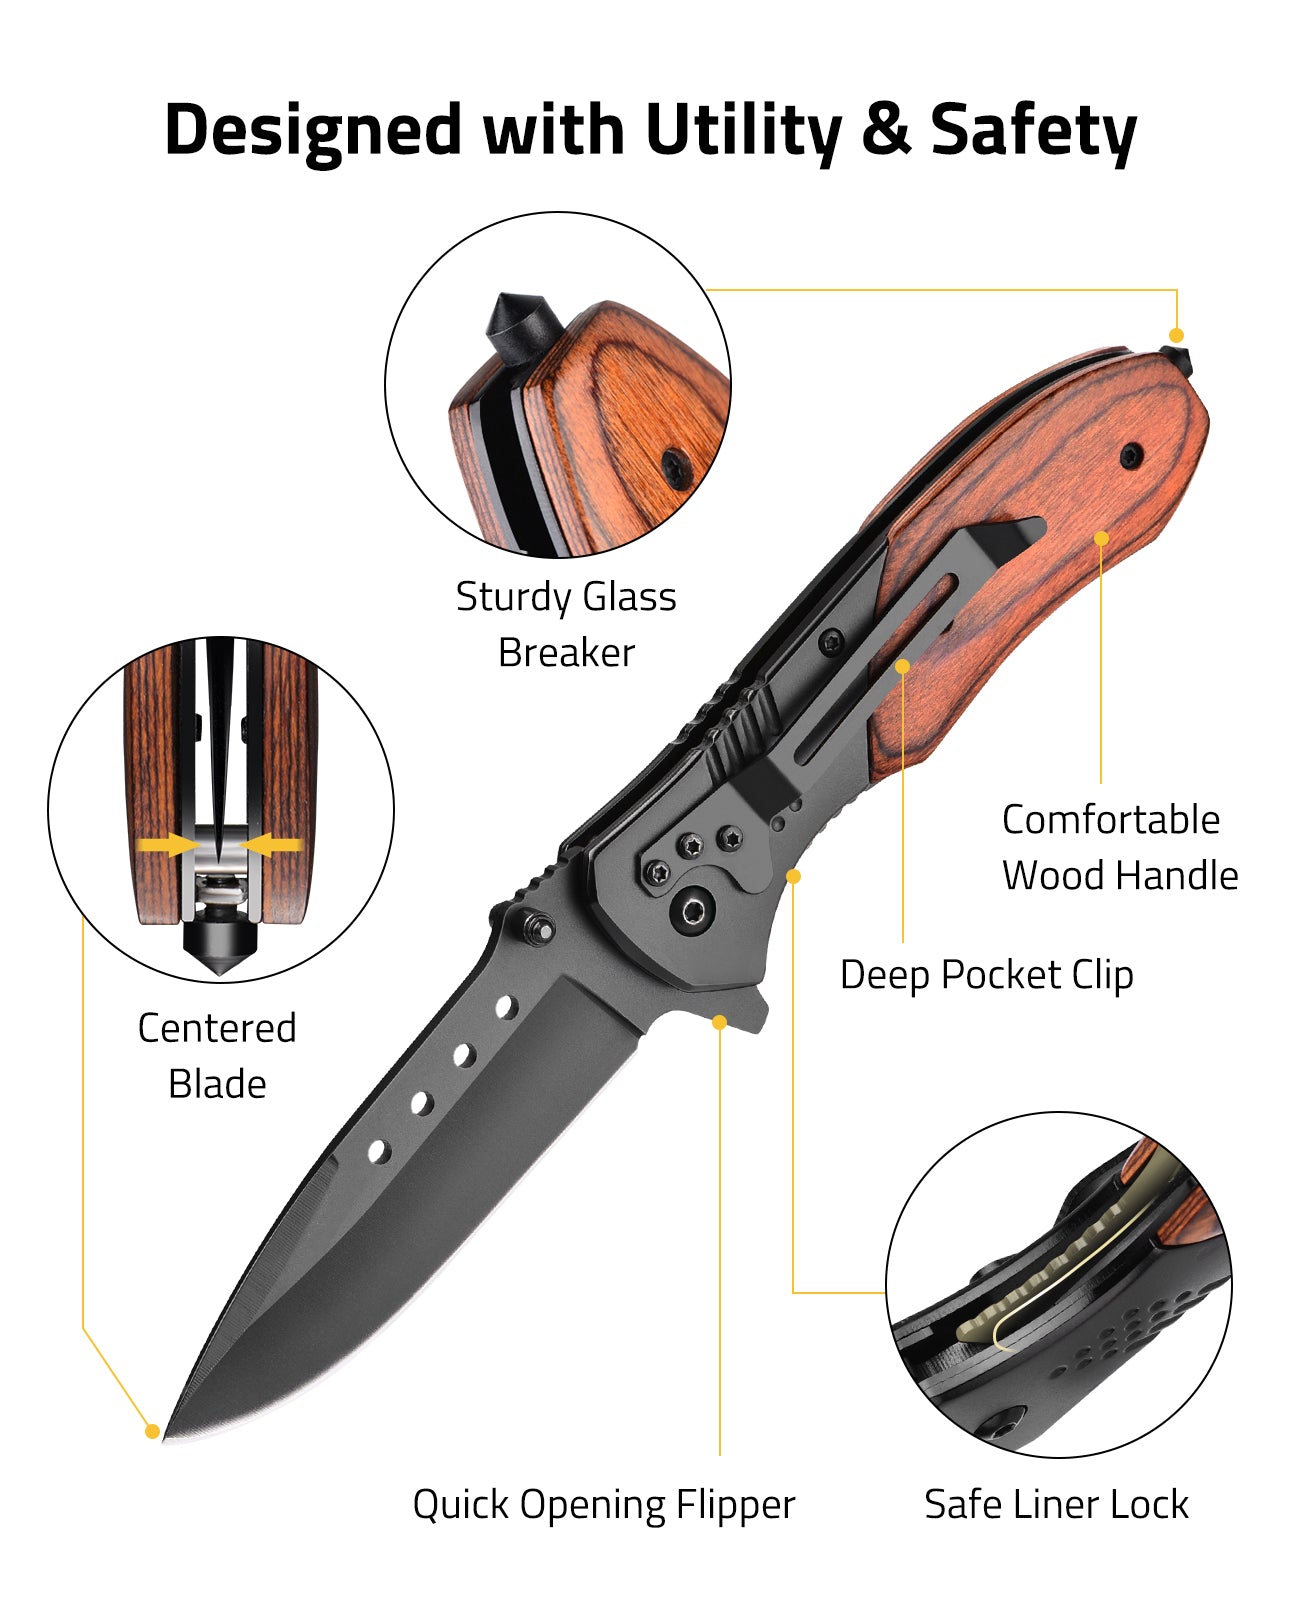 CVLIFE Pocket Knife - 3.46 Ultra Sharp Blade Wood Handle